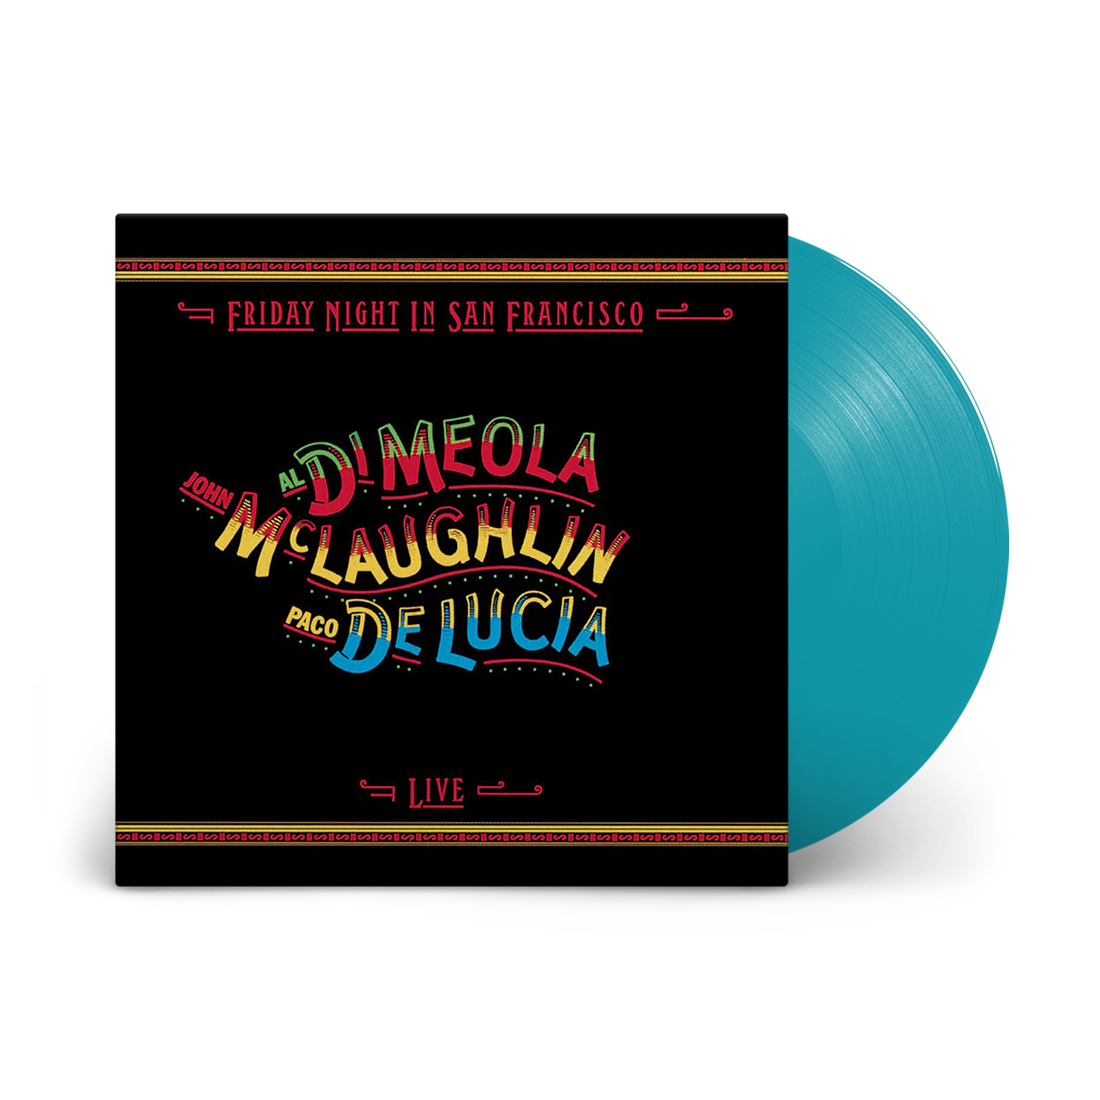 Al Di Meola, John McLaughlin, Paco de Lucía - Friday Night In San Francisco: Limited Turquoise Blue Vinyl LP